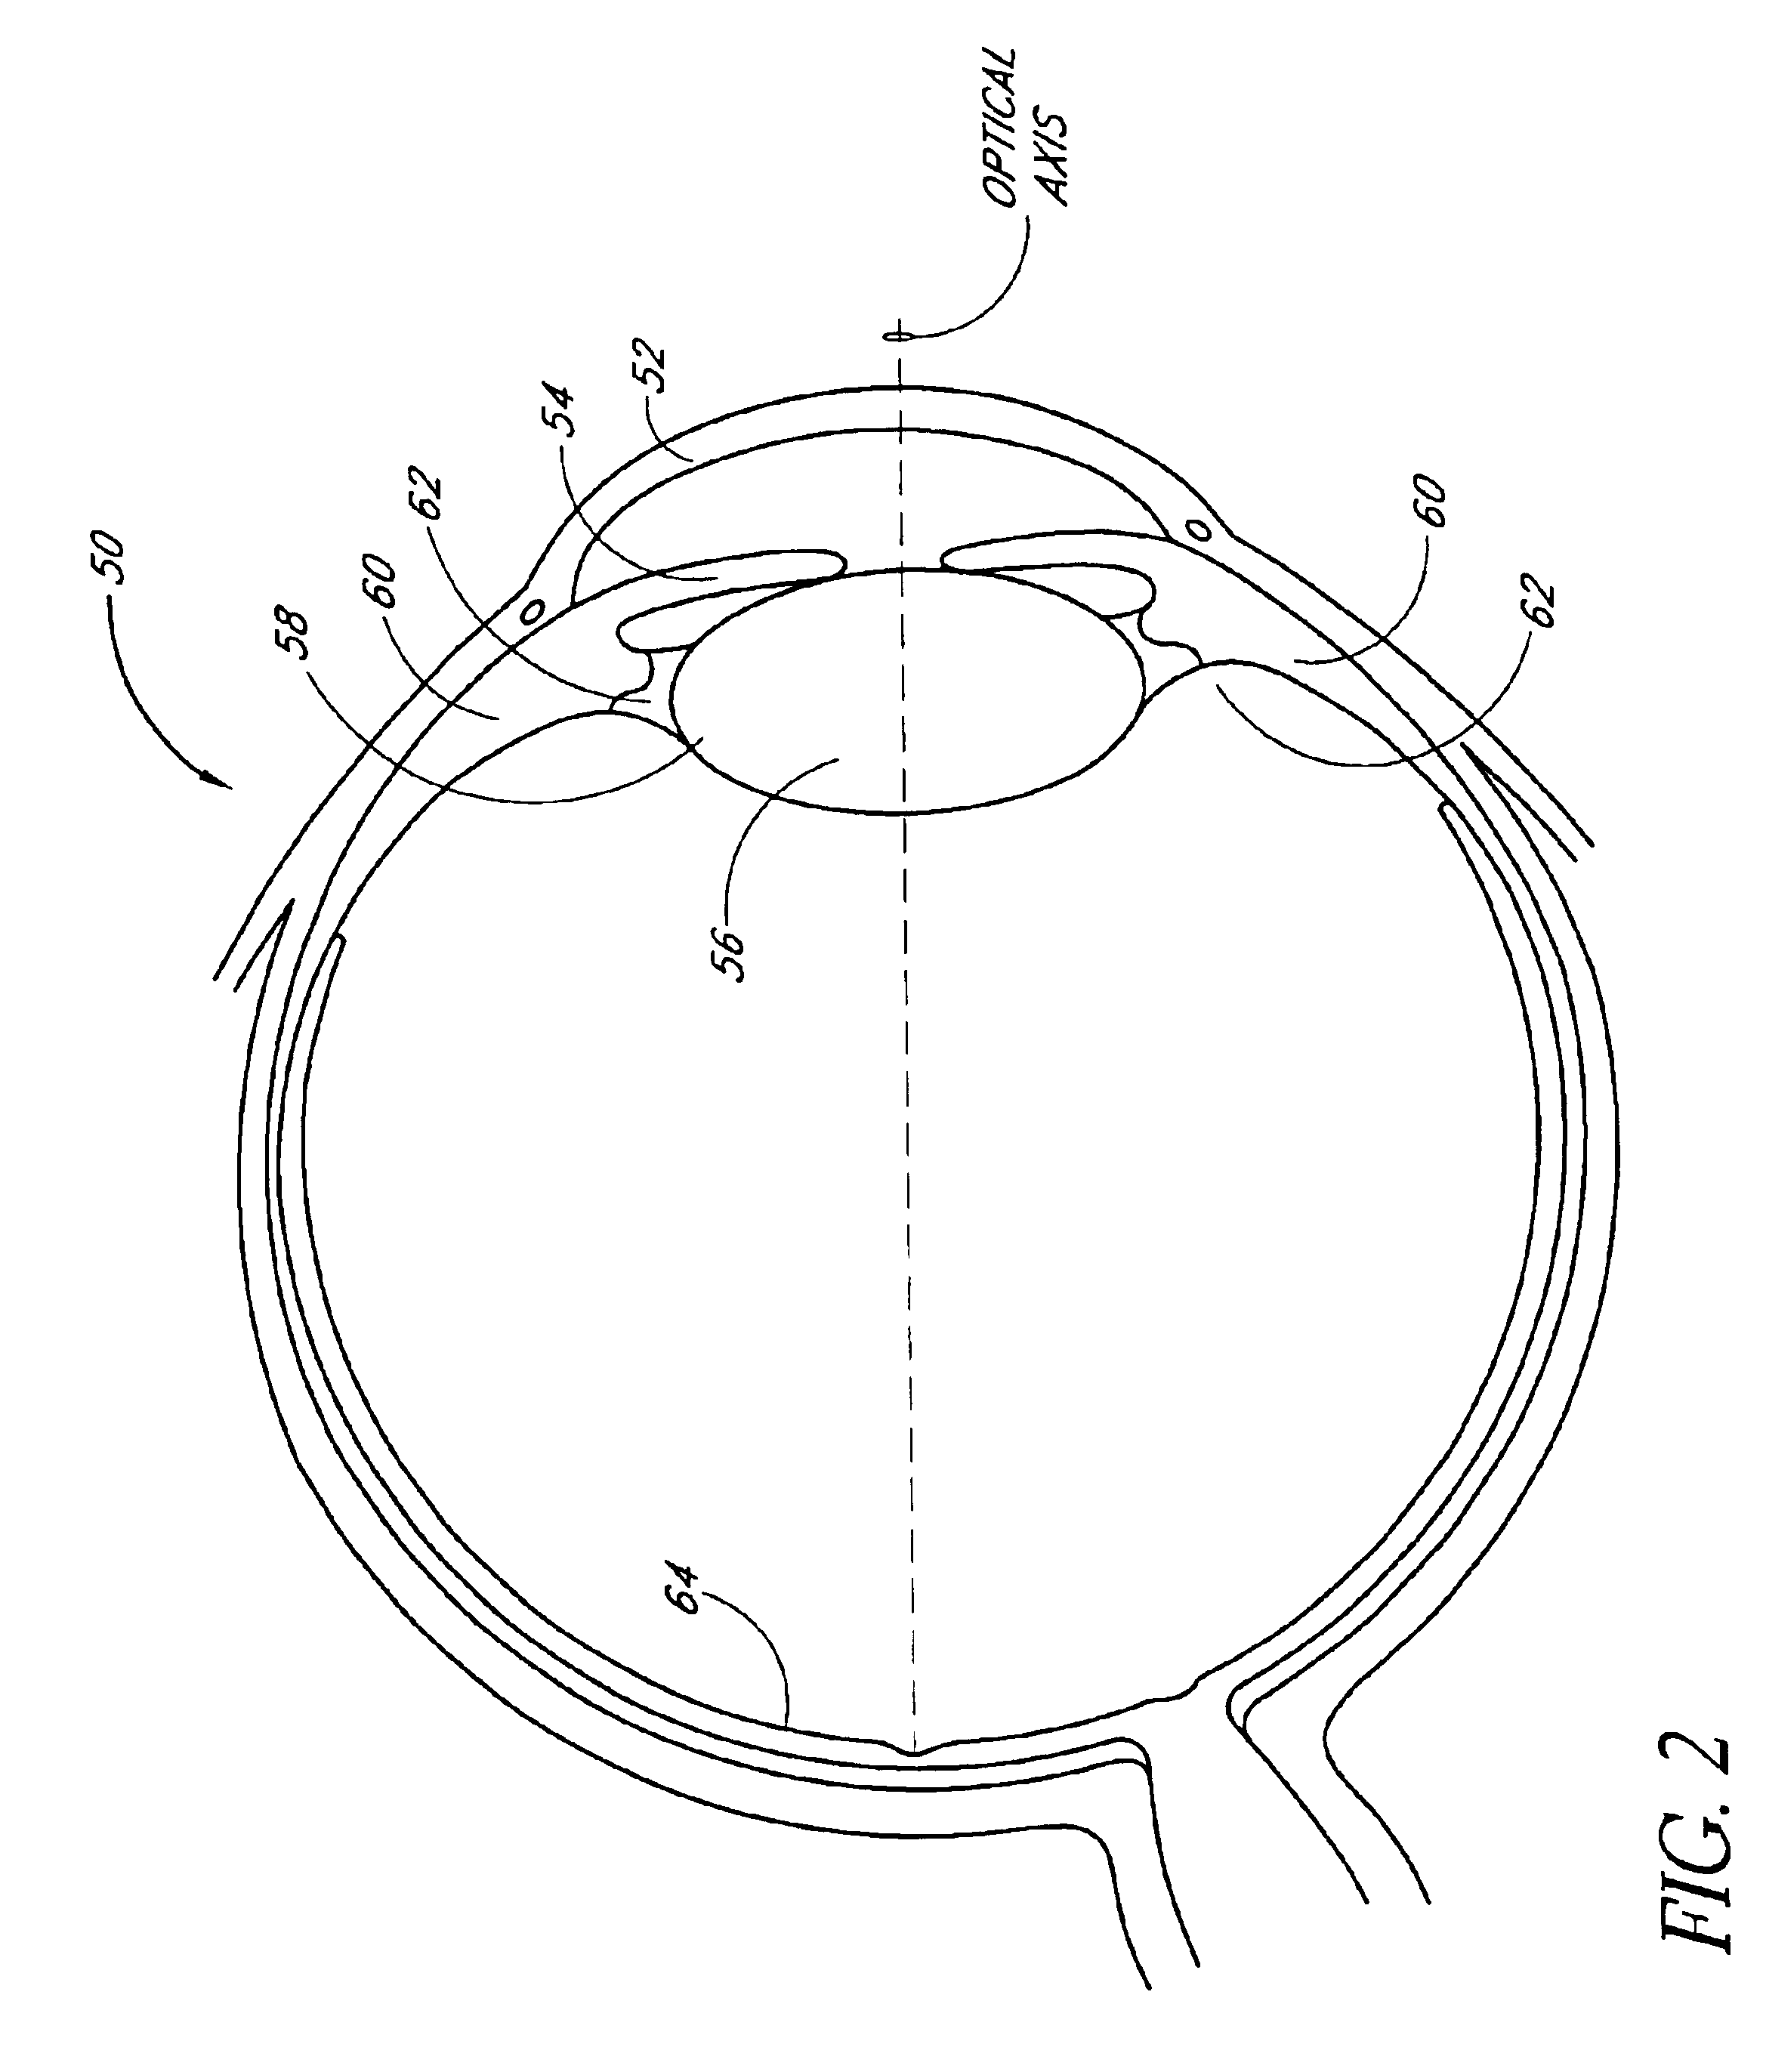 Method of preparing an intraocular lens for implantation